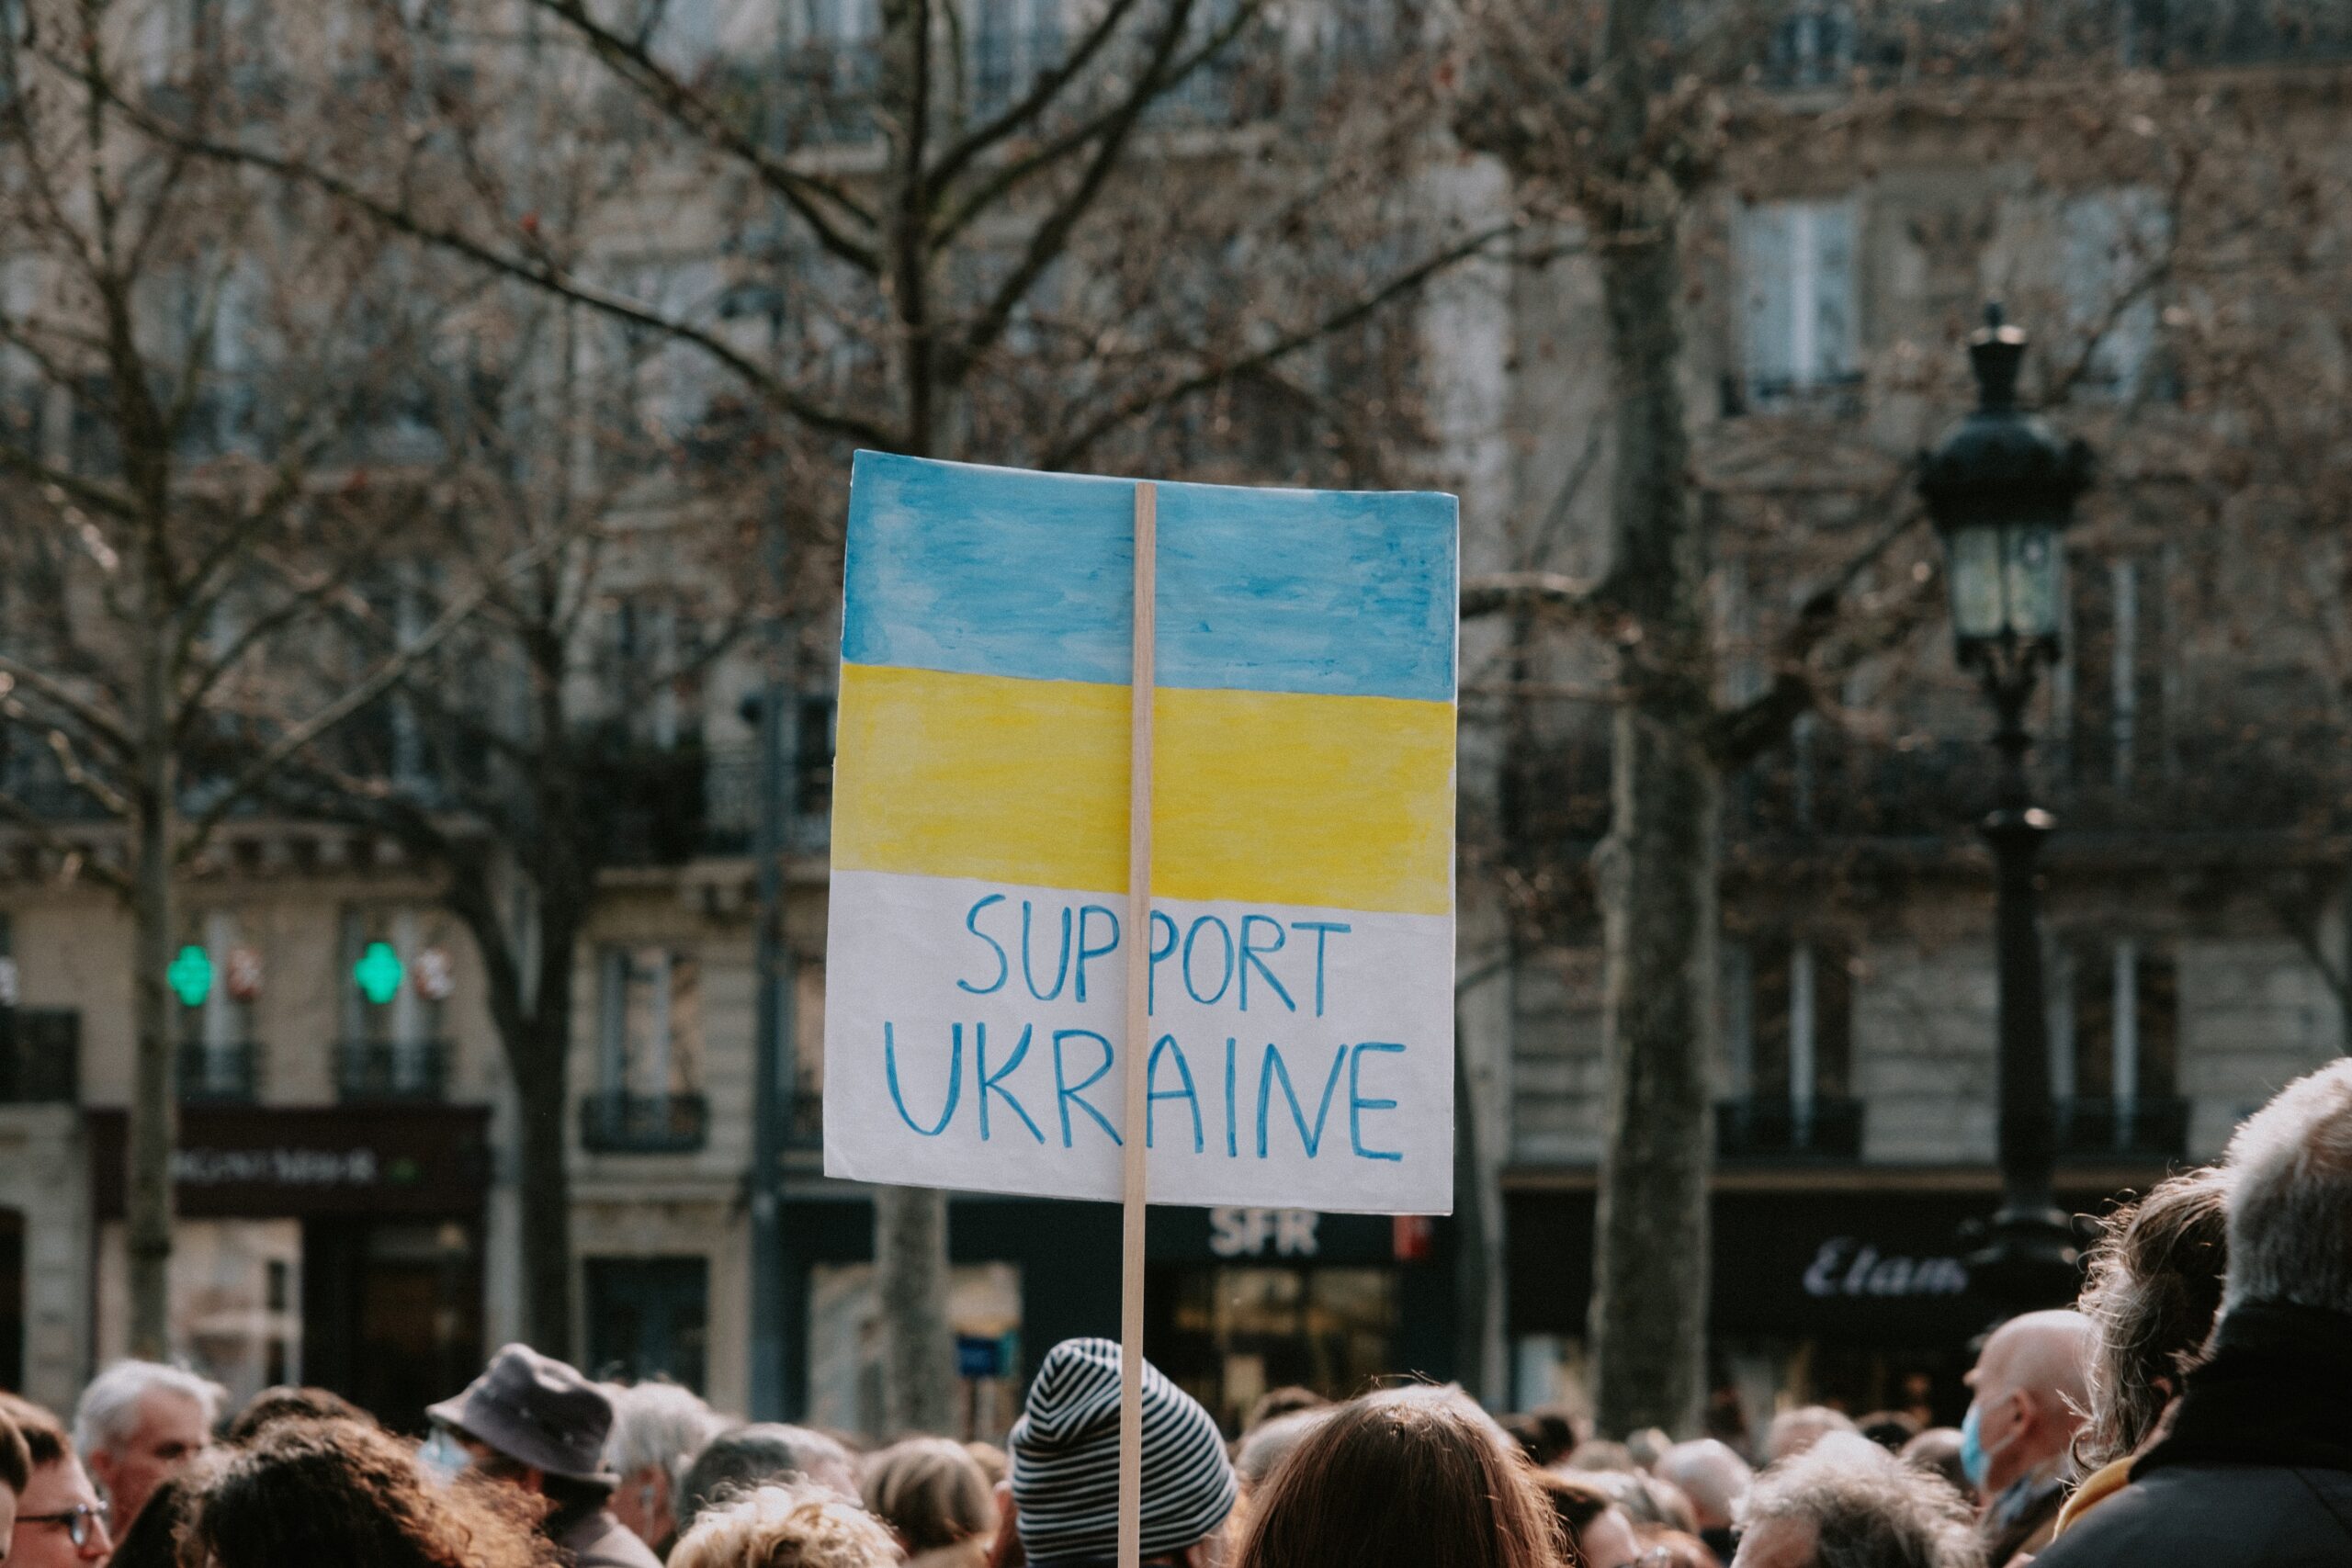 Ukraine Sign (Photo by Mathias Reding/Pexel.com)